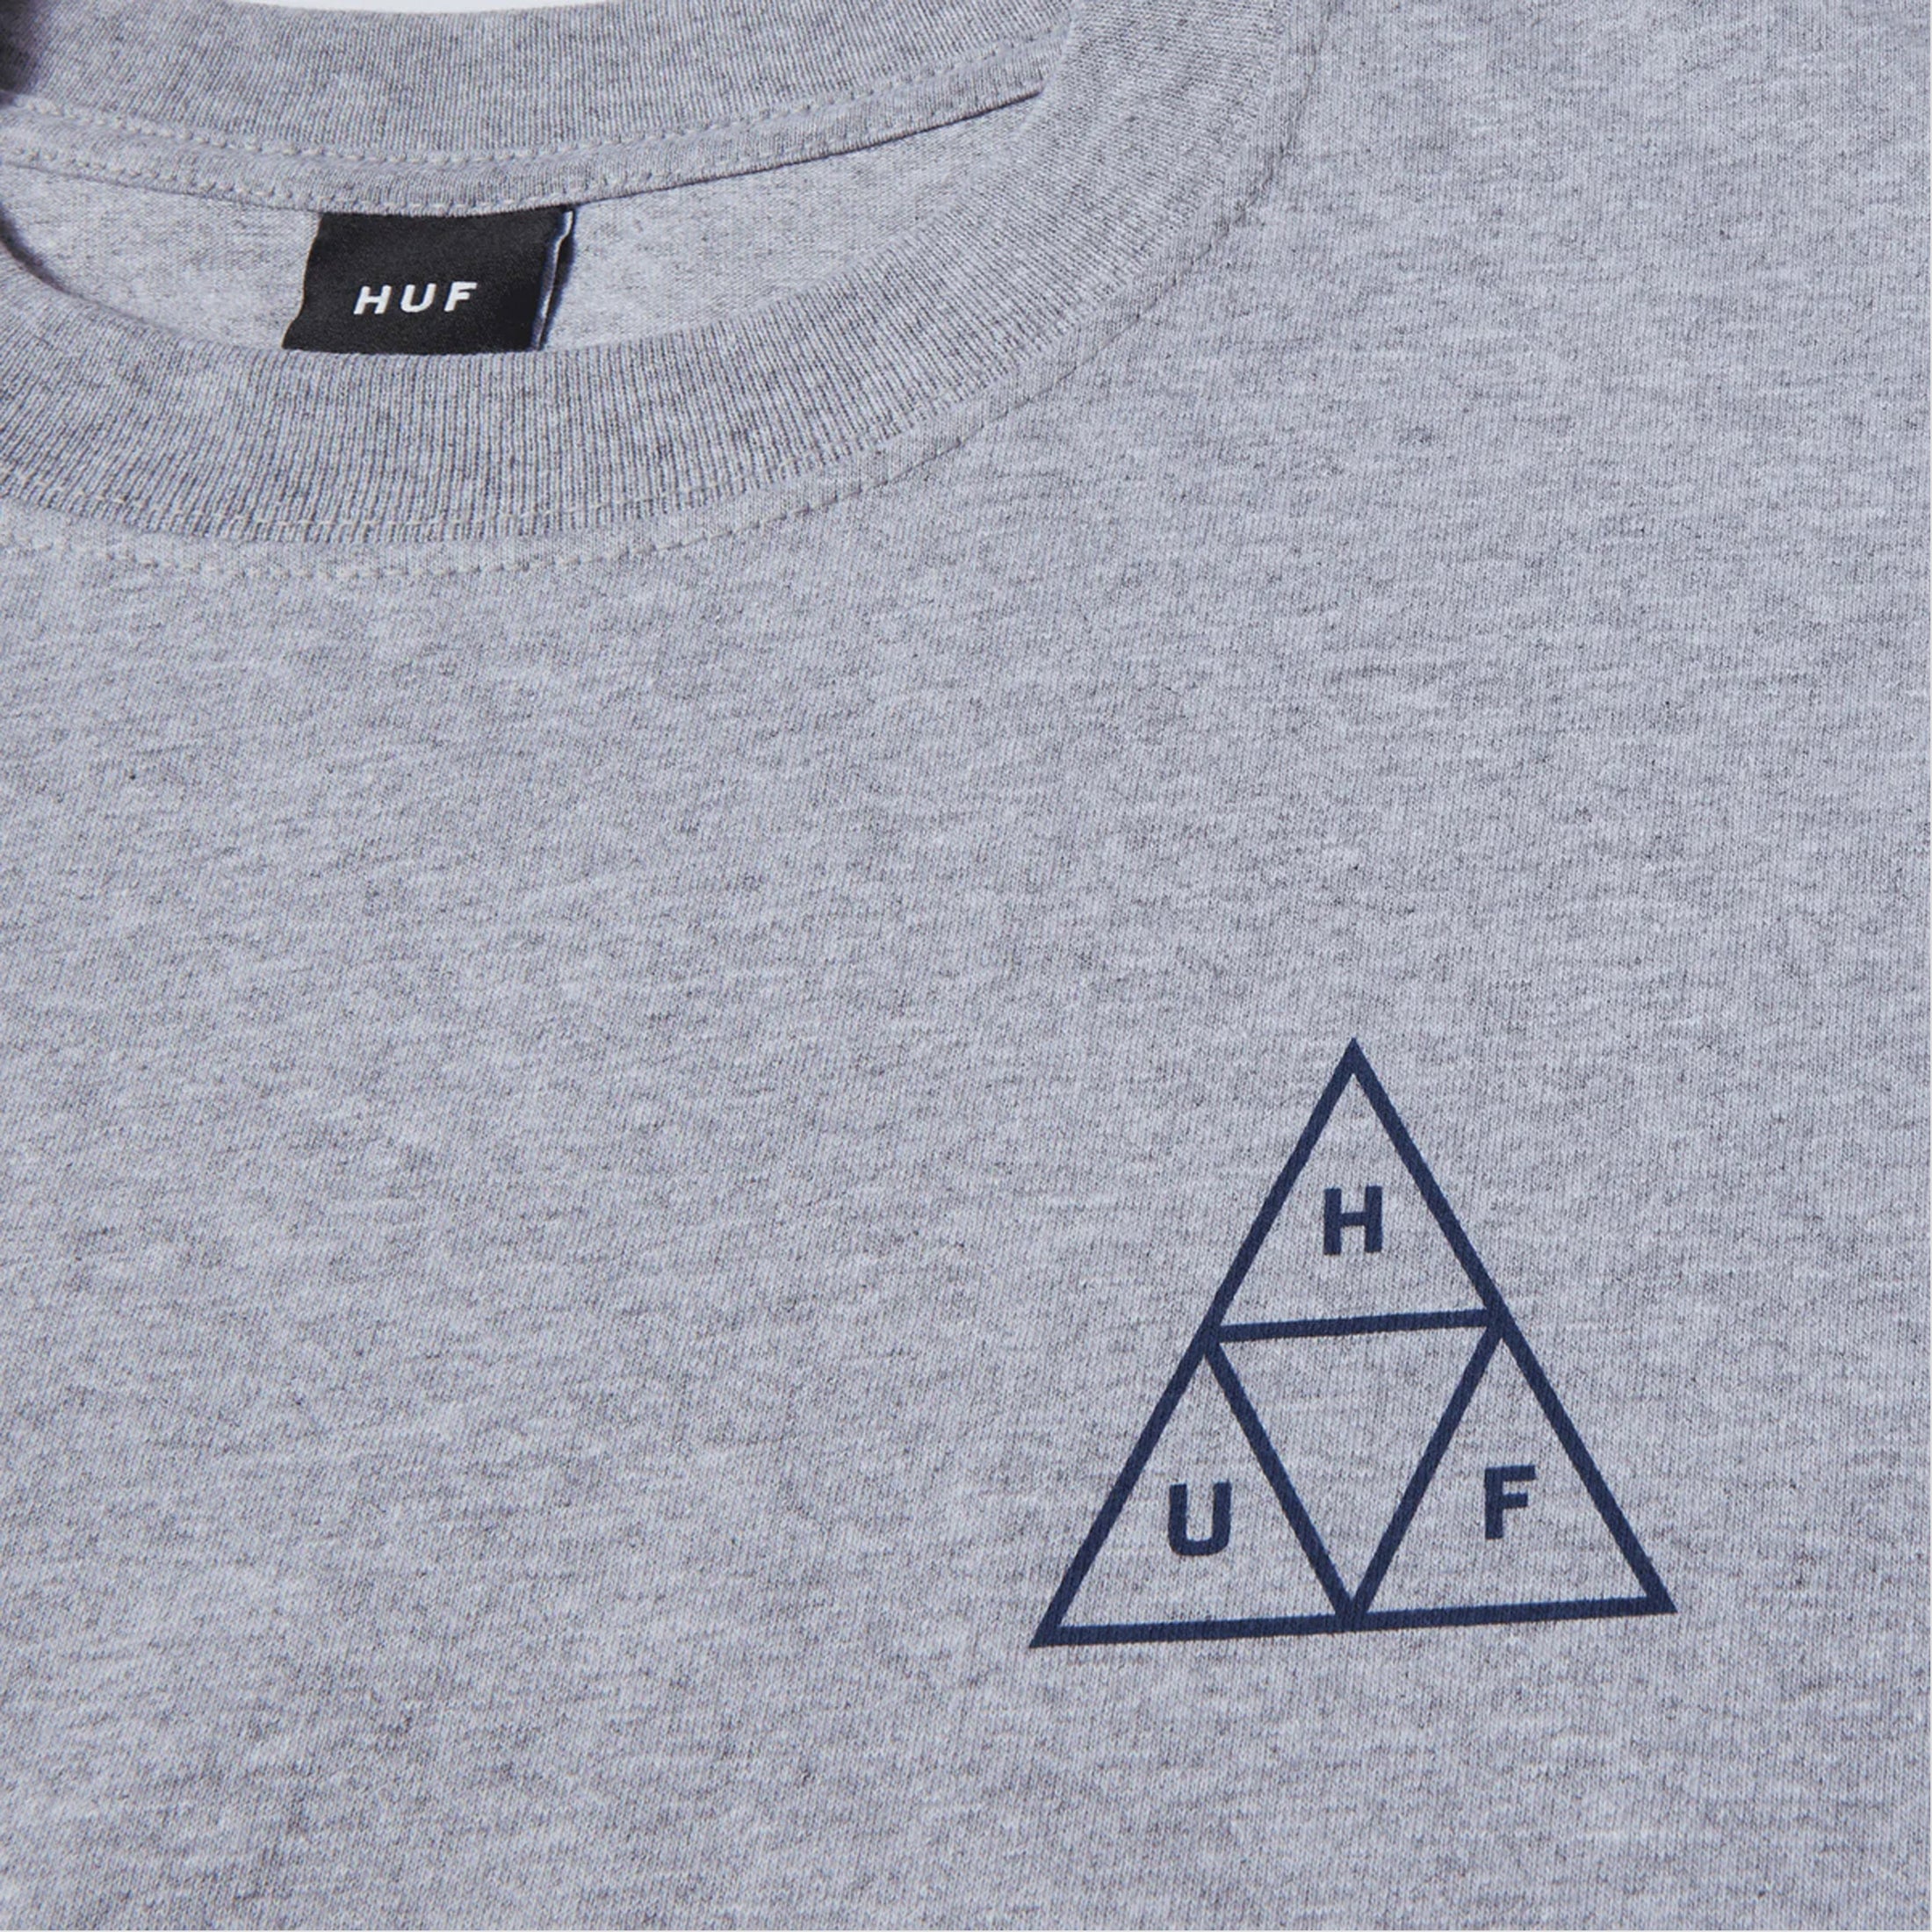 Huf Set Triple Triangle Long Sleeve T-Shirt Heather Grey